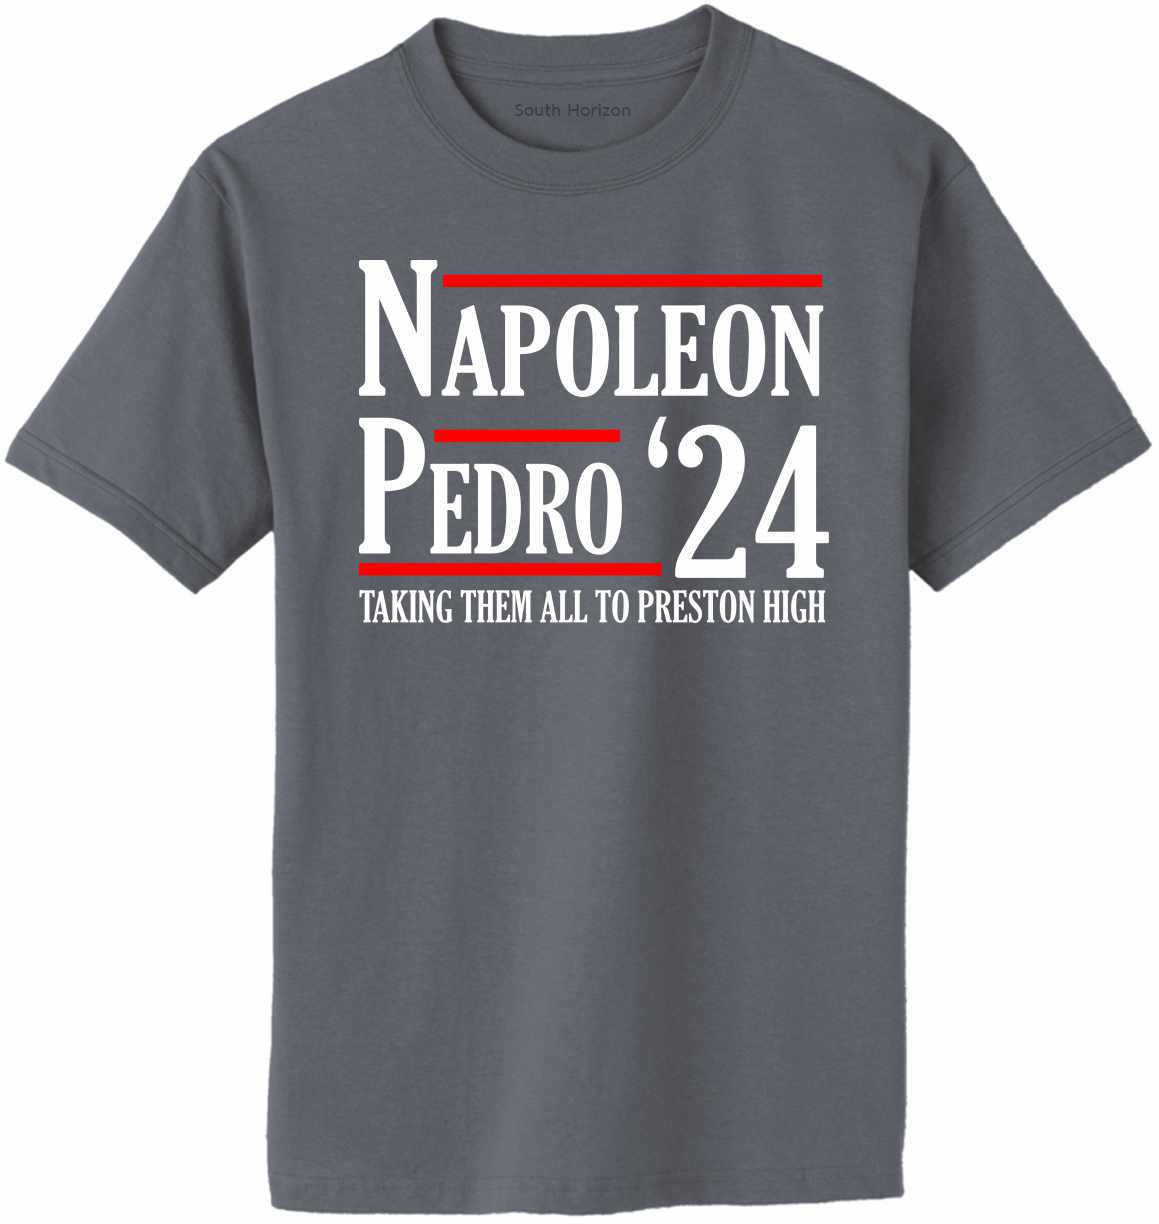 Napoleon Pedro 24 on Adult T-Shirt (#1343-1)